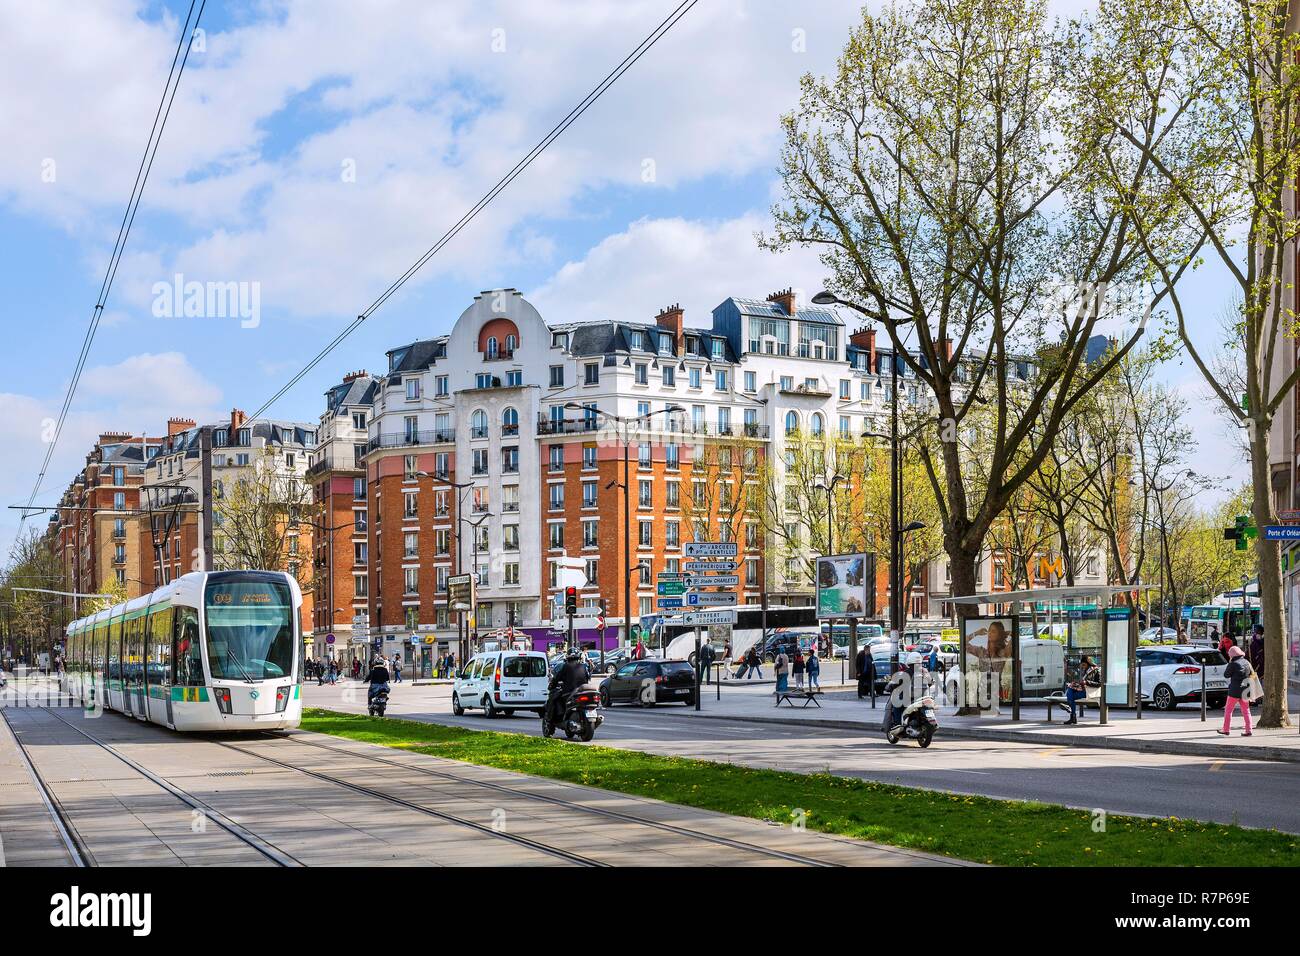 Bus stop paris hi-res stock photography and images - Alamy